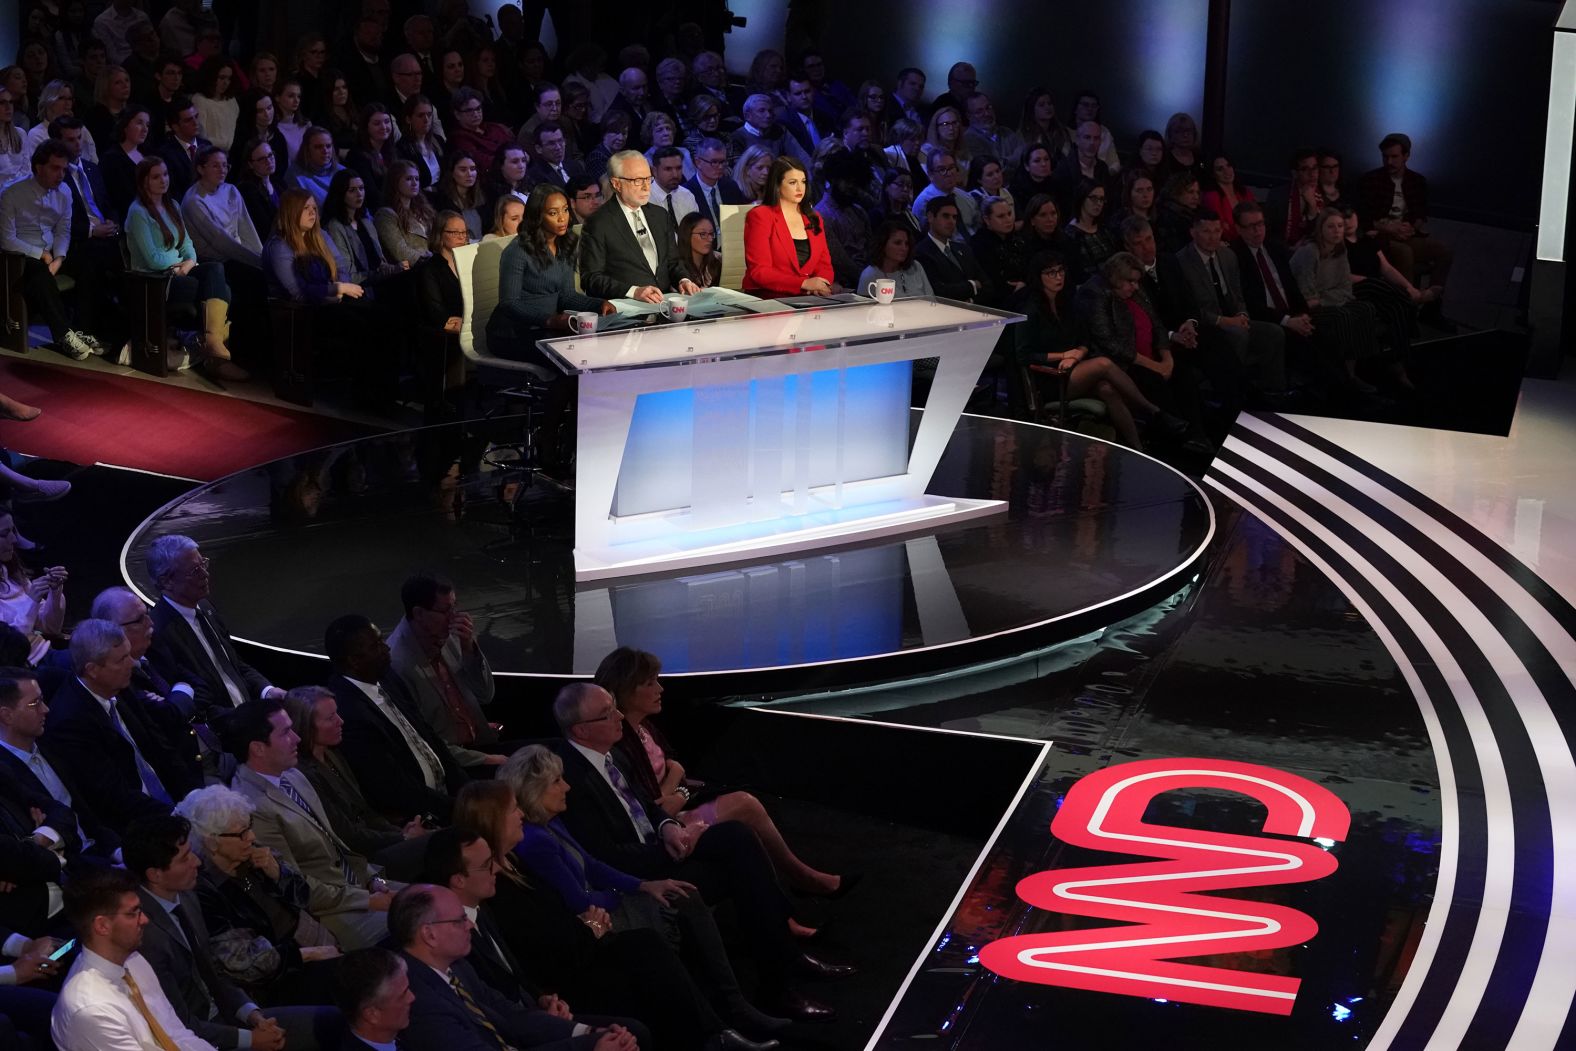 The moderators of Tuesday night's debate were CNN's Abby Phillip, CNN's Wolf Blitzer and The Des Moines Register's Brianne Pfannenstiel.